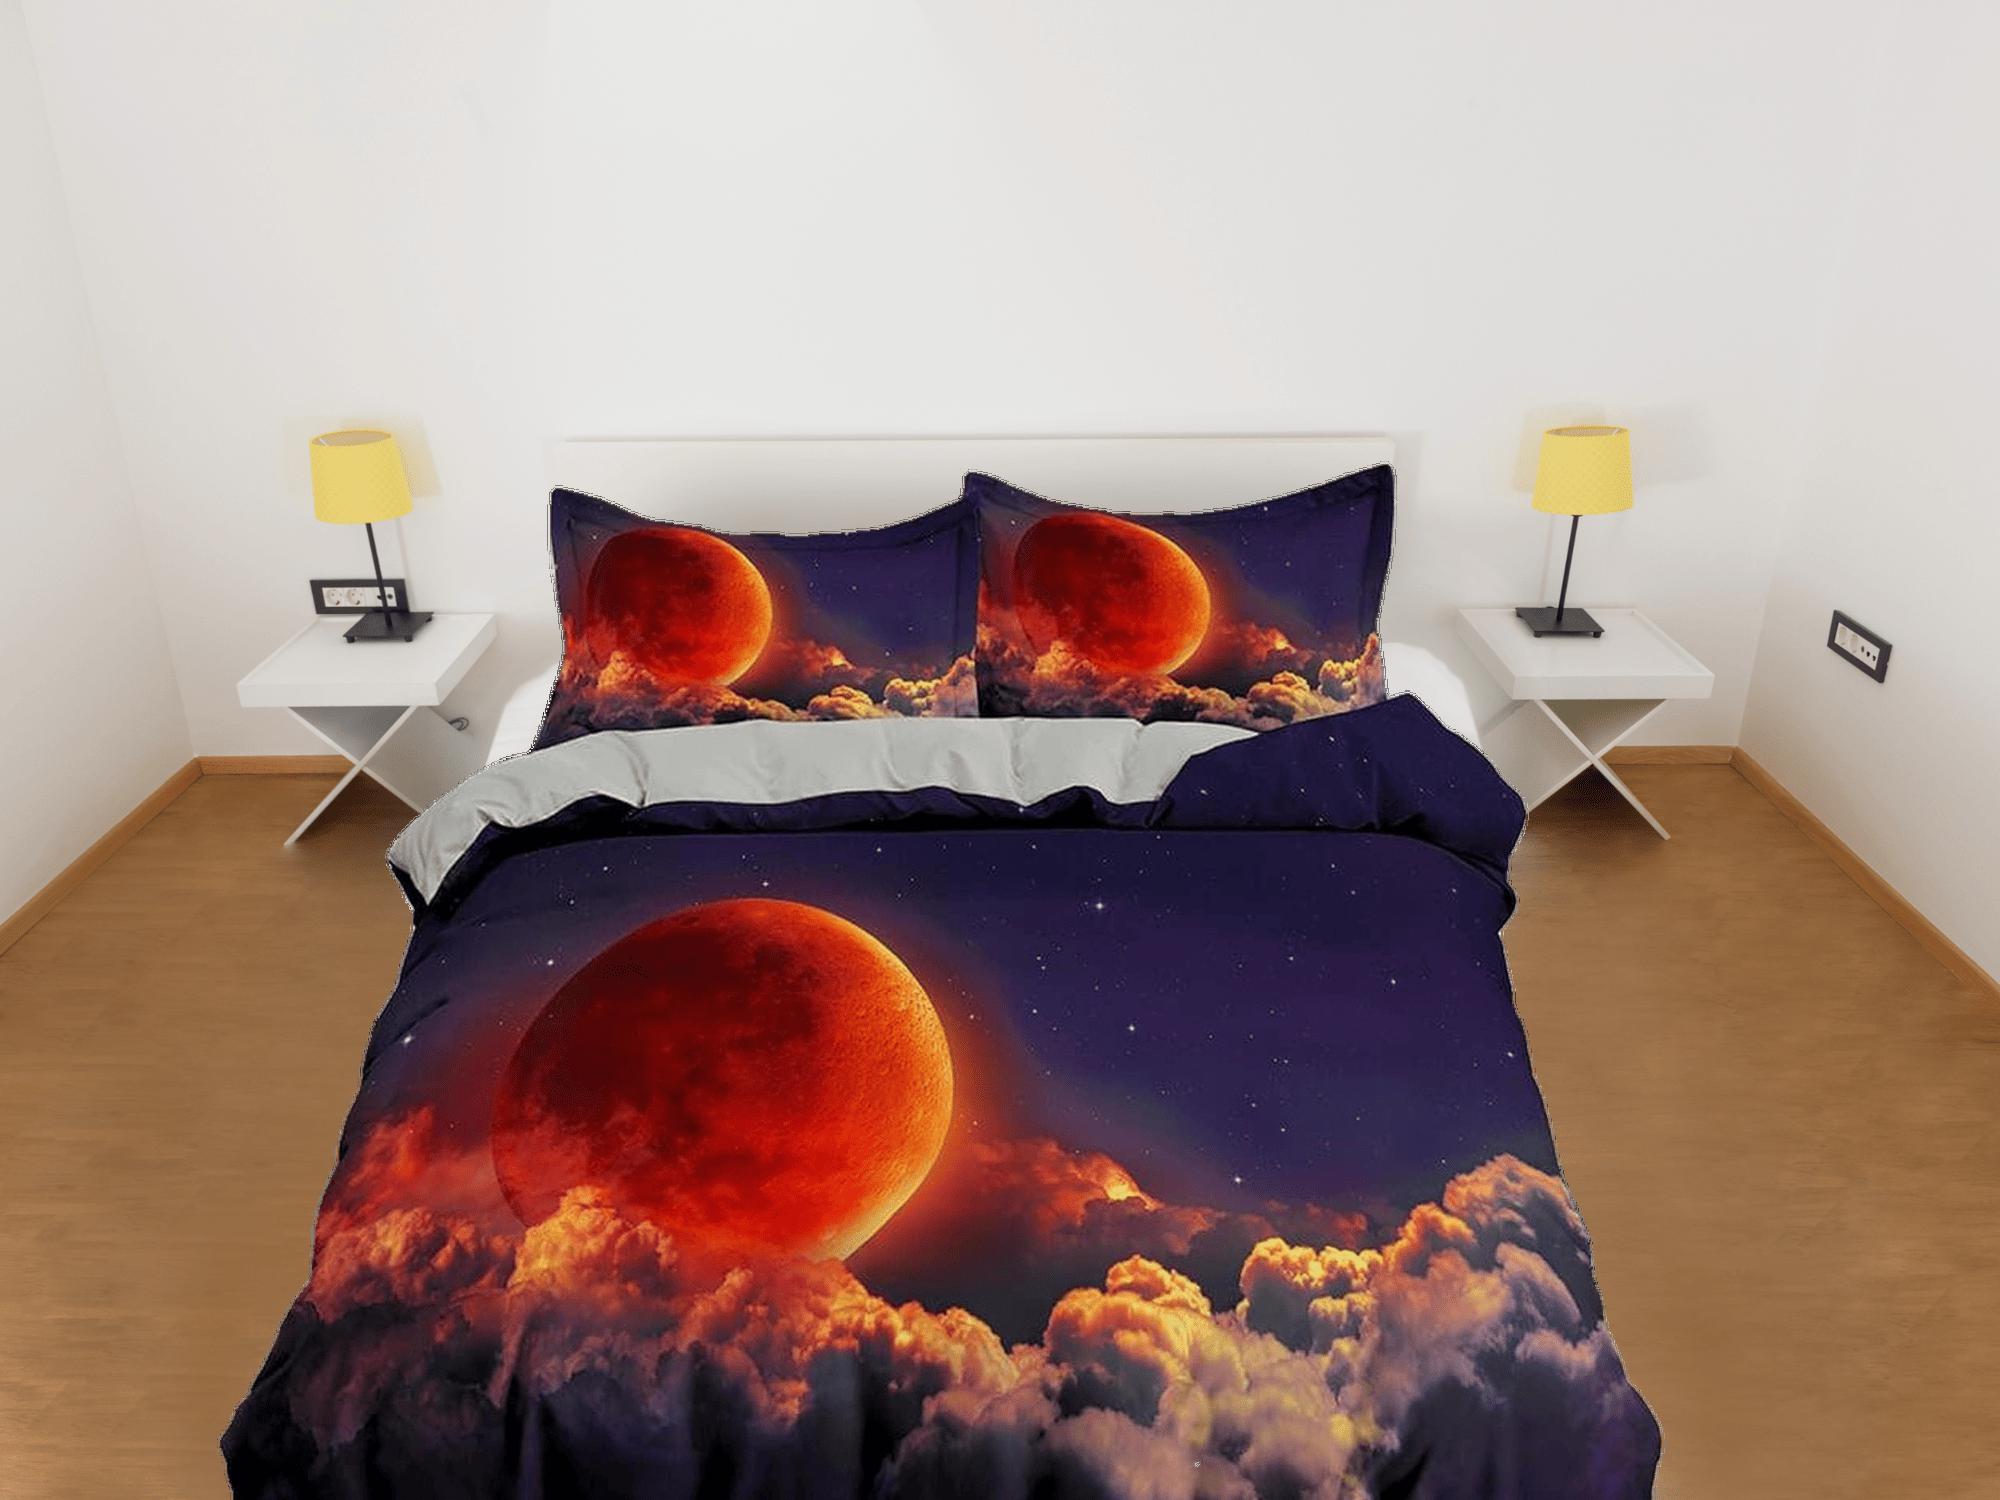 daintyduvet Red moon duvet cover set galaxy bedding, space bedding set full, duvet cover king, queen, dorm bedding, toddler bedding